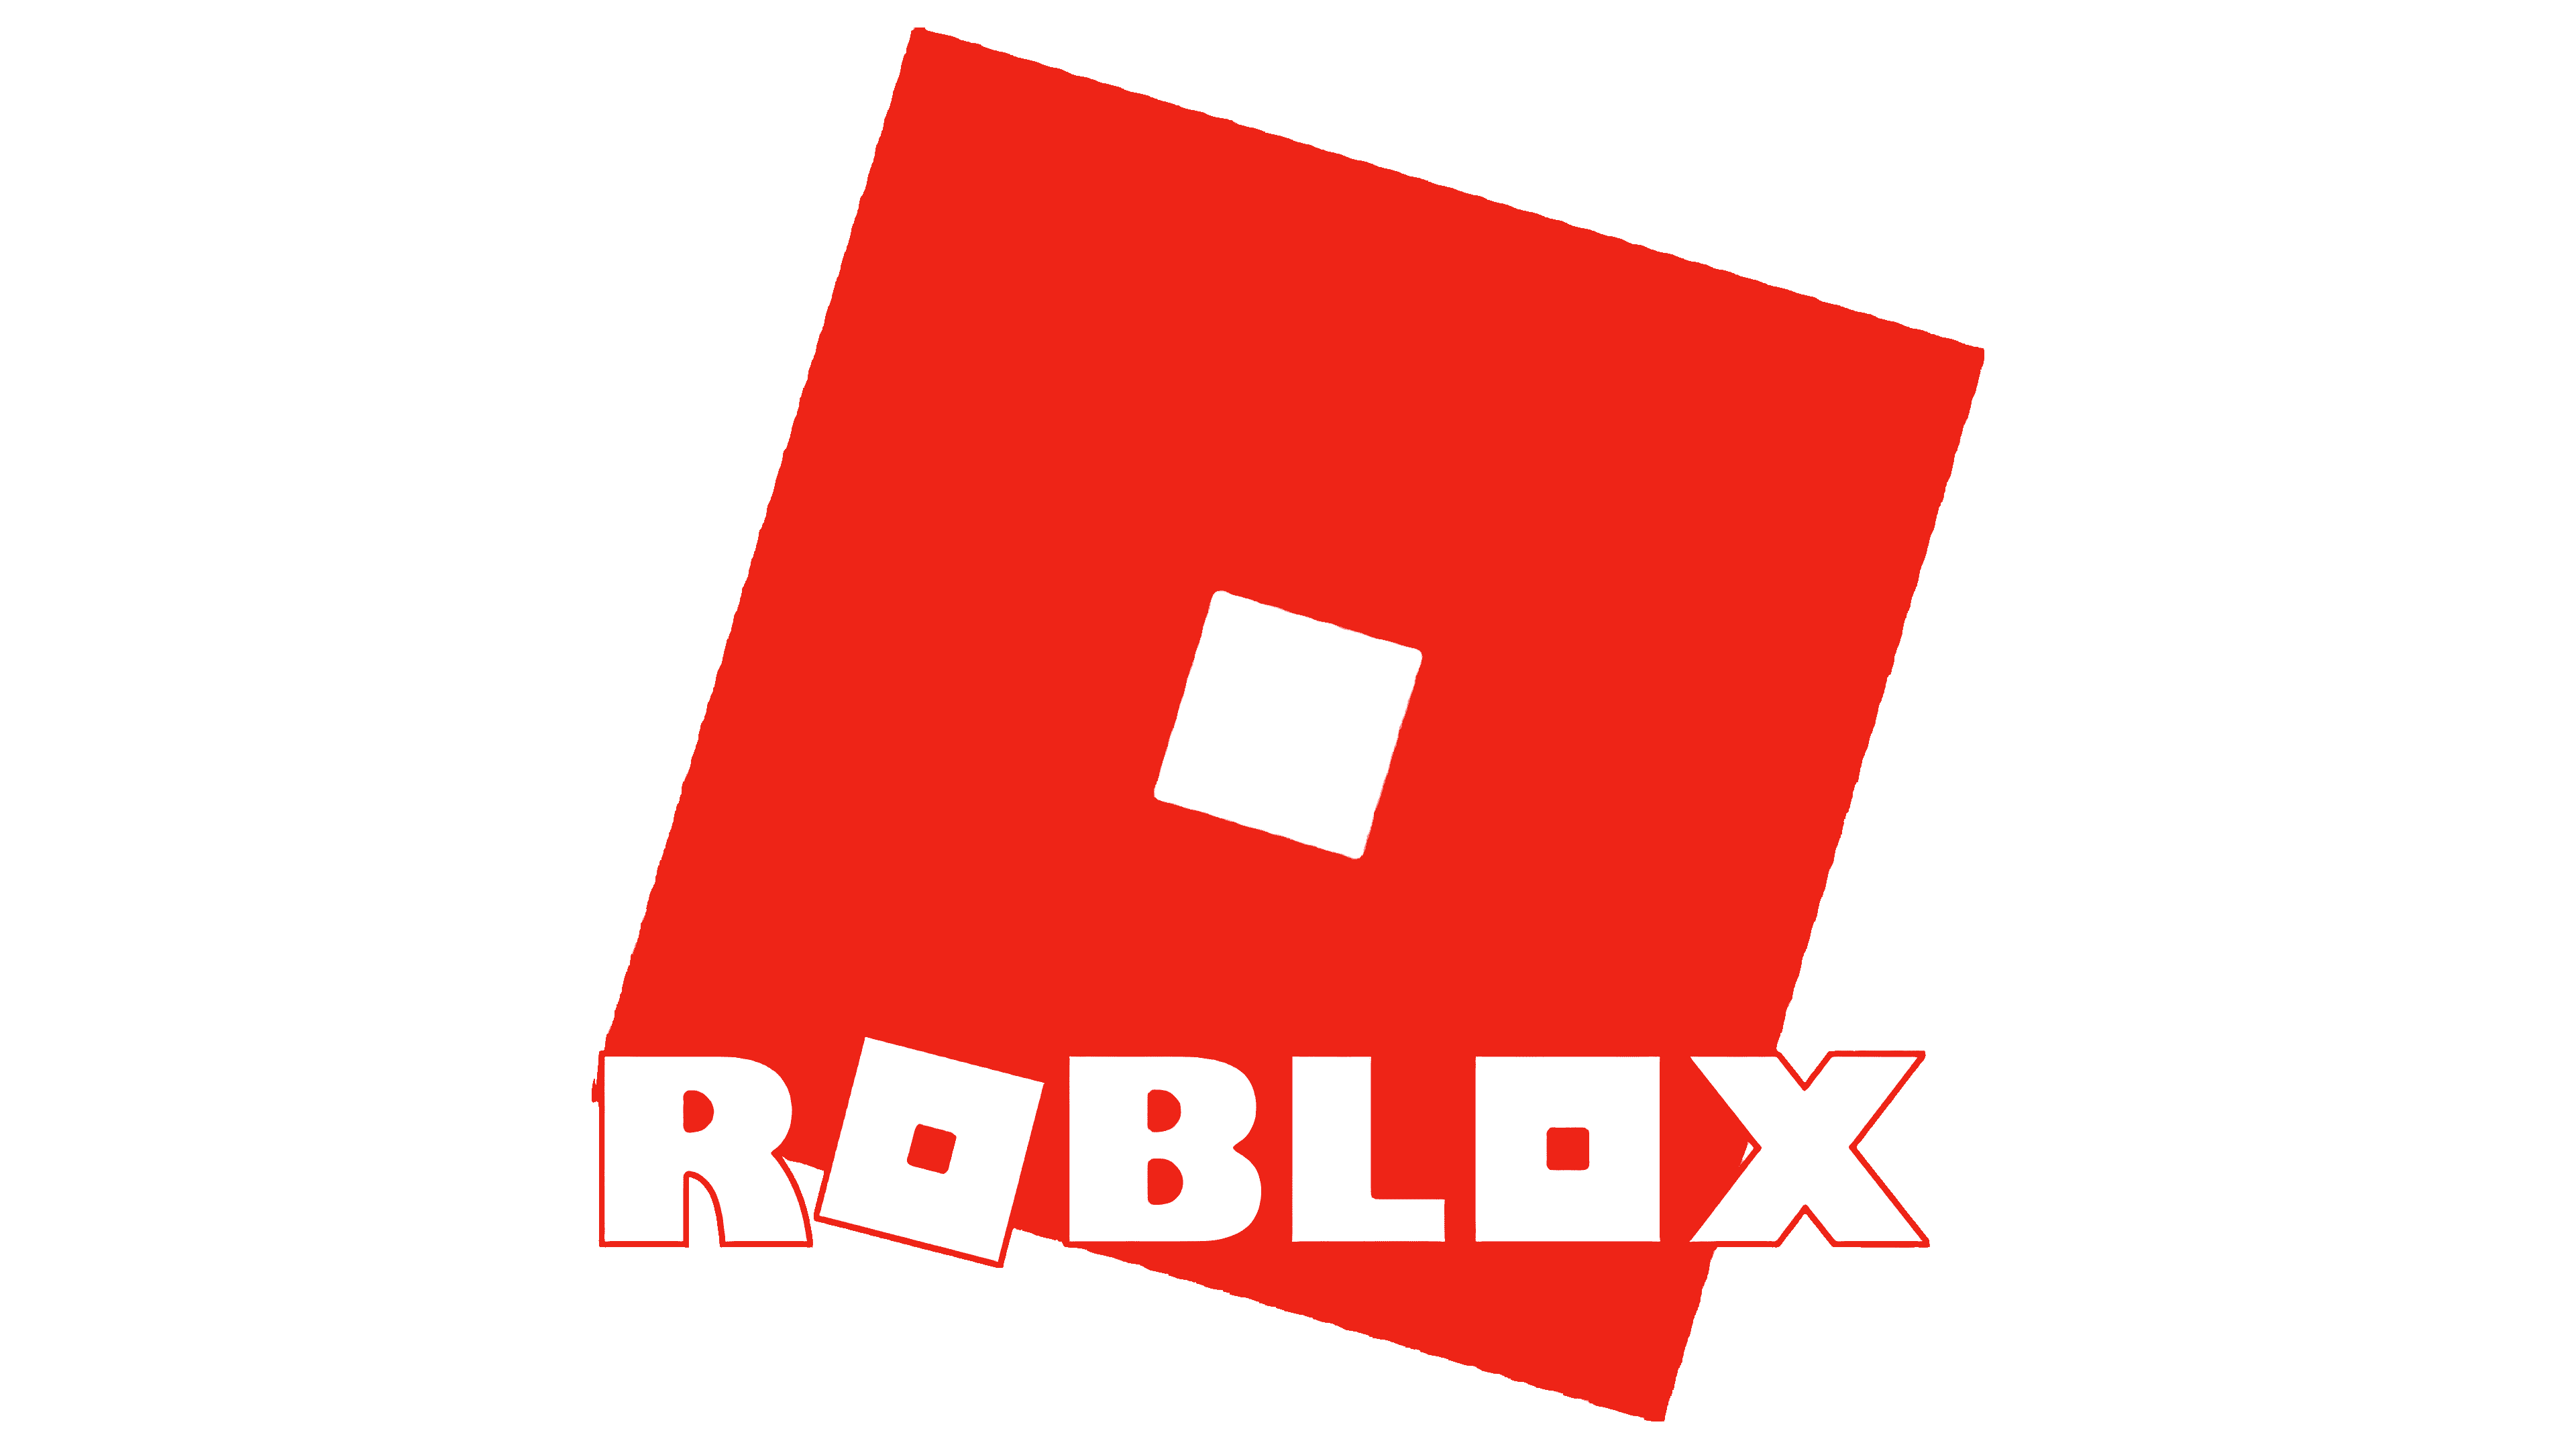 Roblox com library logo. Roblox логотип. РОБЛОКС надпись. РОБЛОКС ярлык. РОБЛОКС без фона.